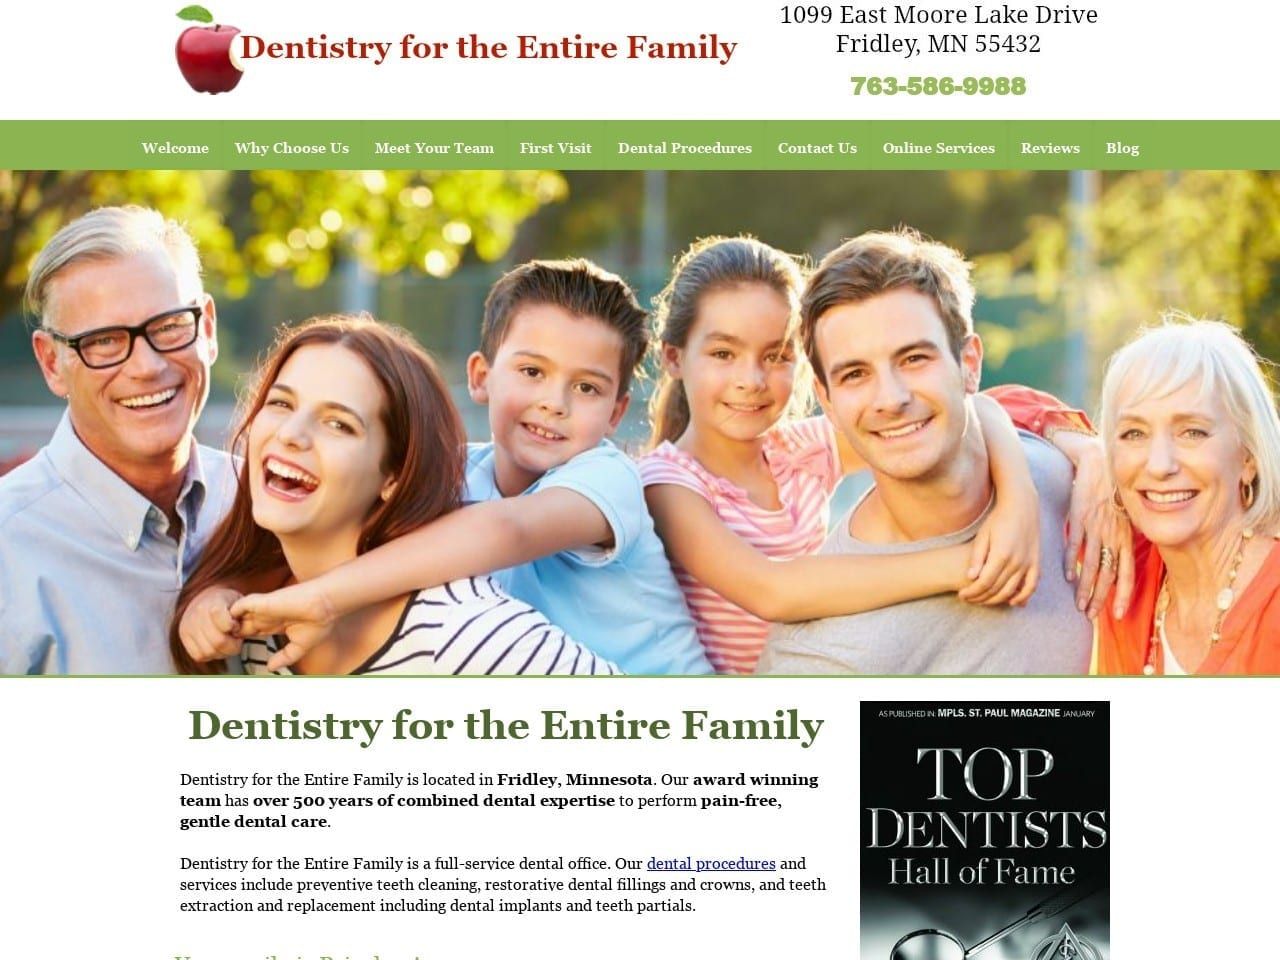 Dentistry For The Entire Family Website Screenshot from cretzmeyer.com